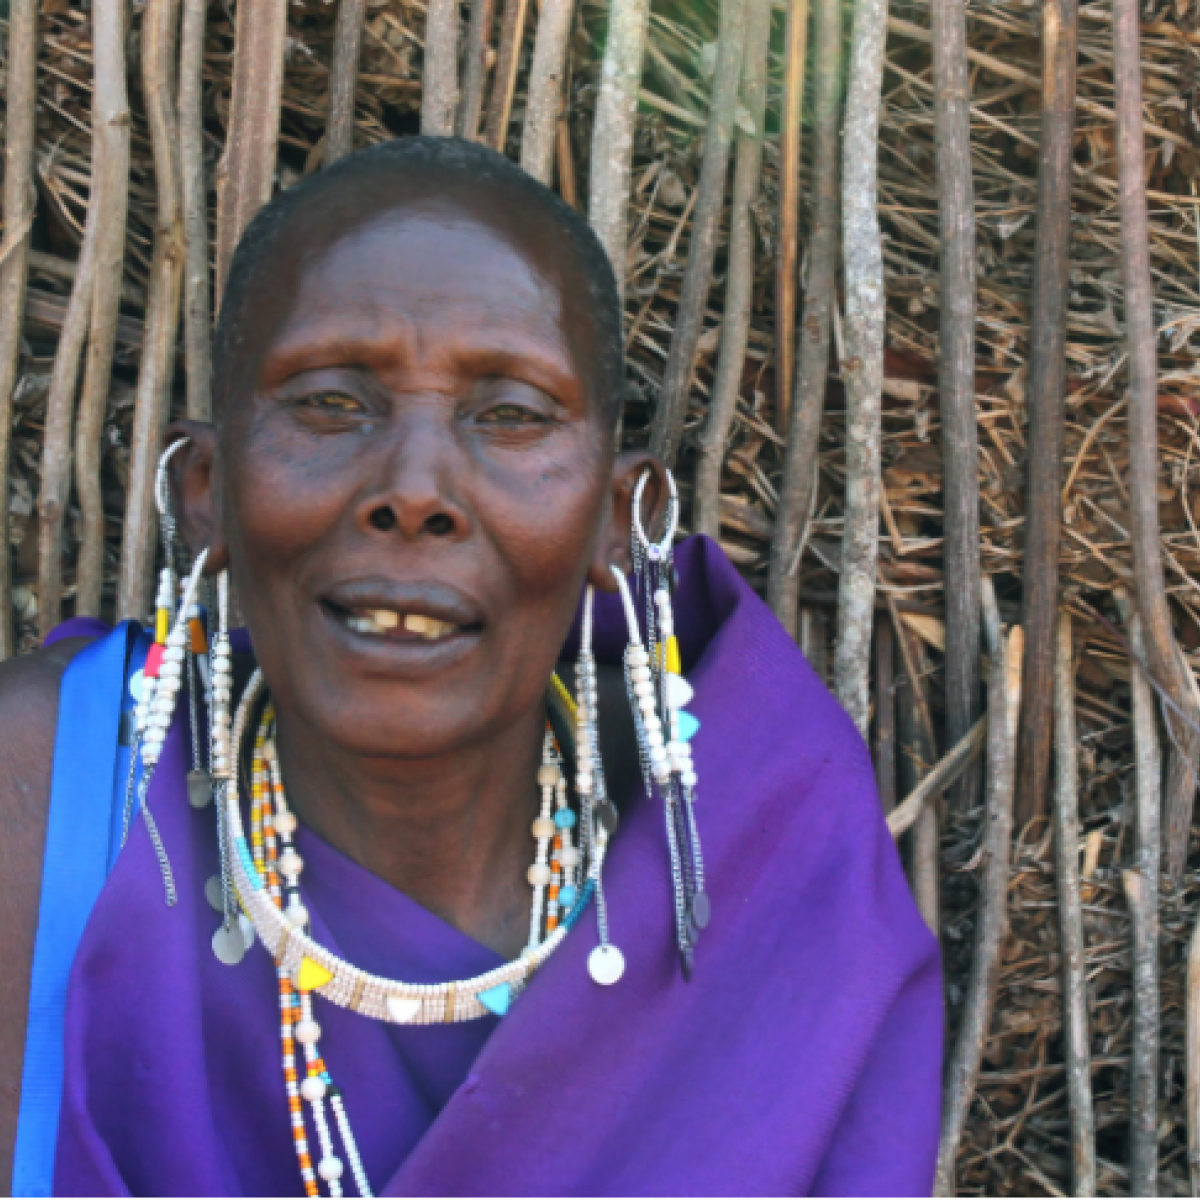 Yasinta, the Masai traditional birth attendant